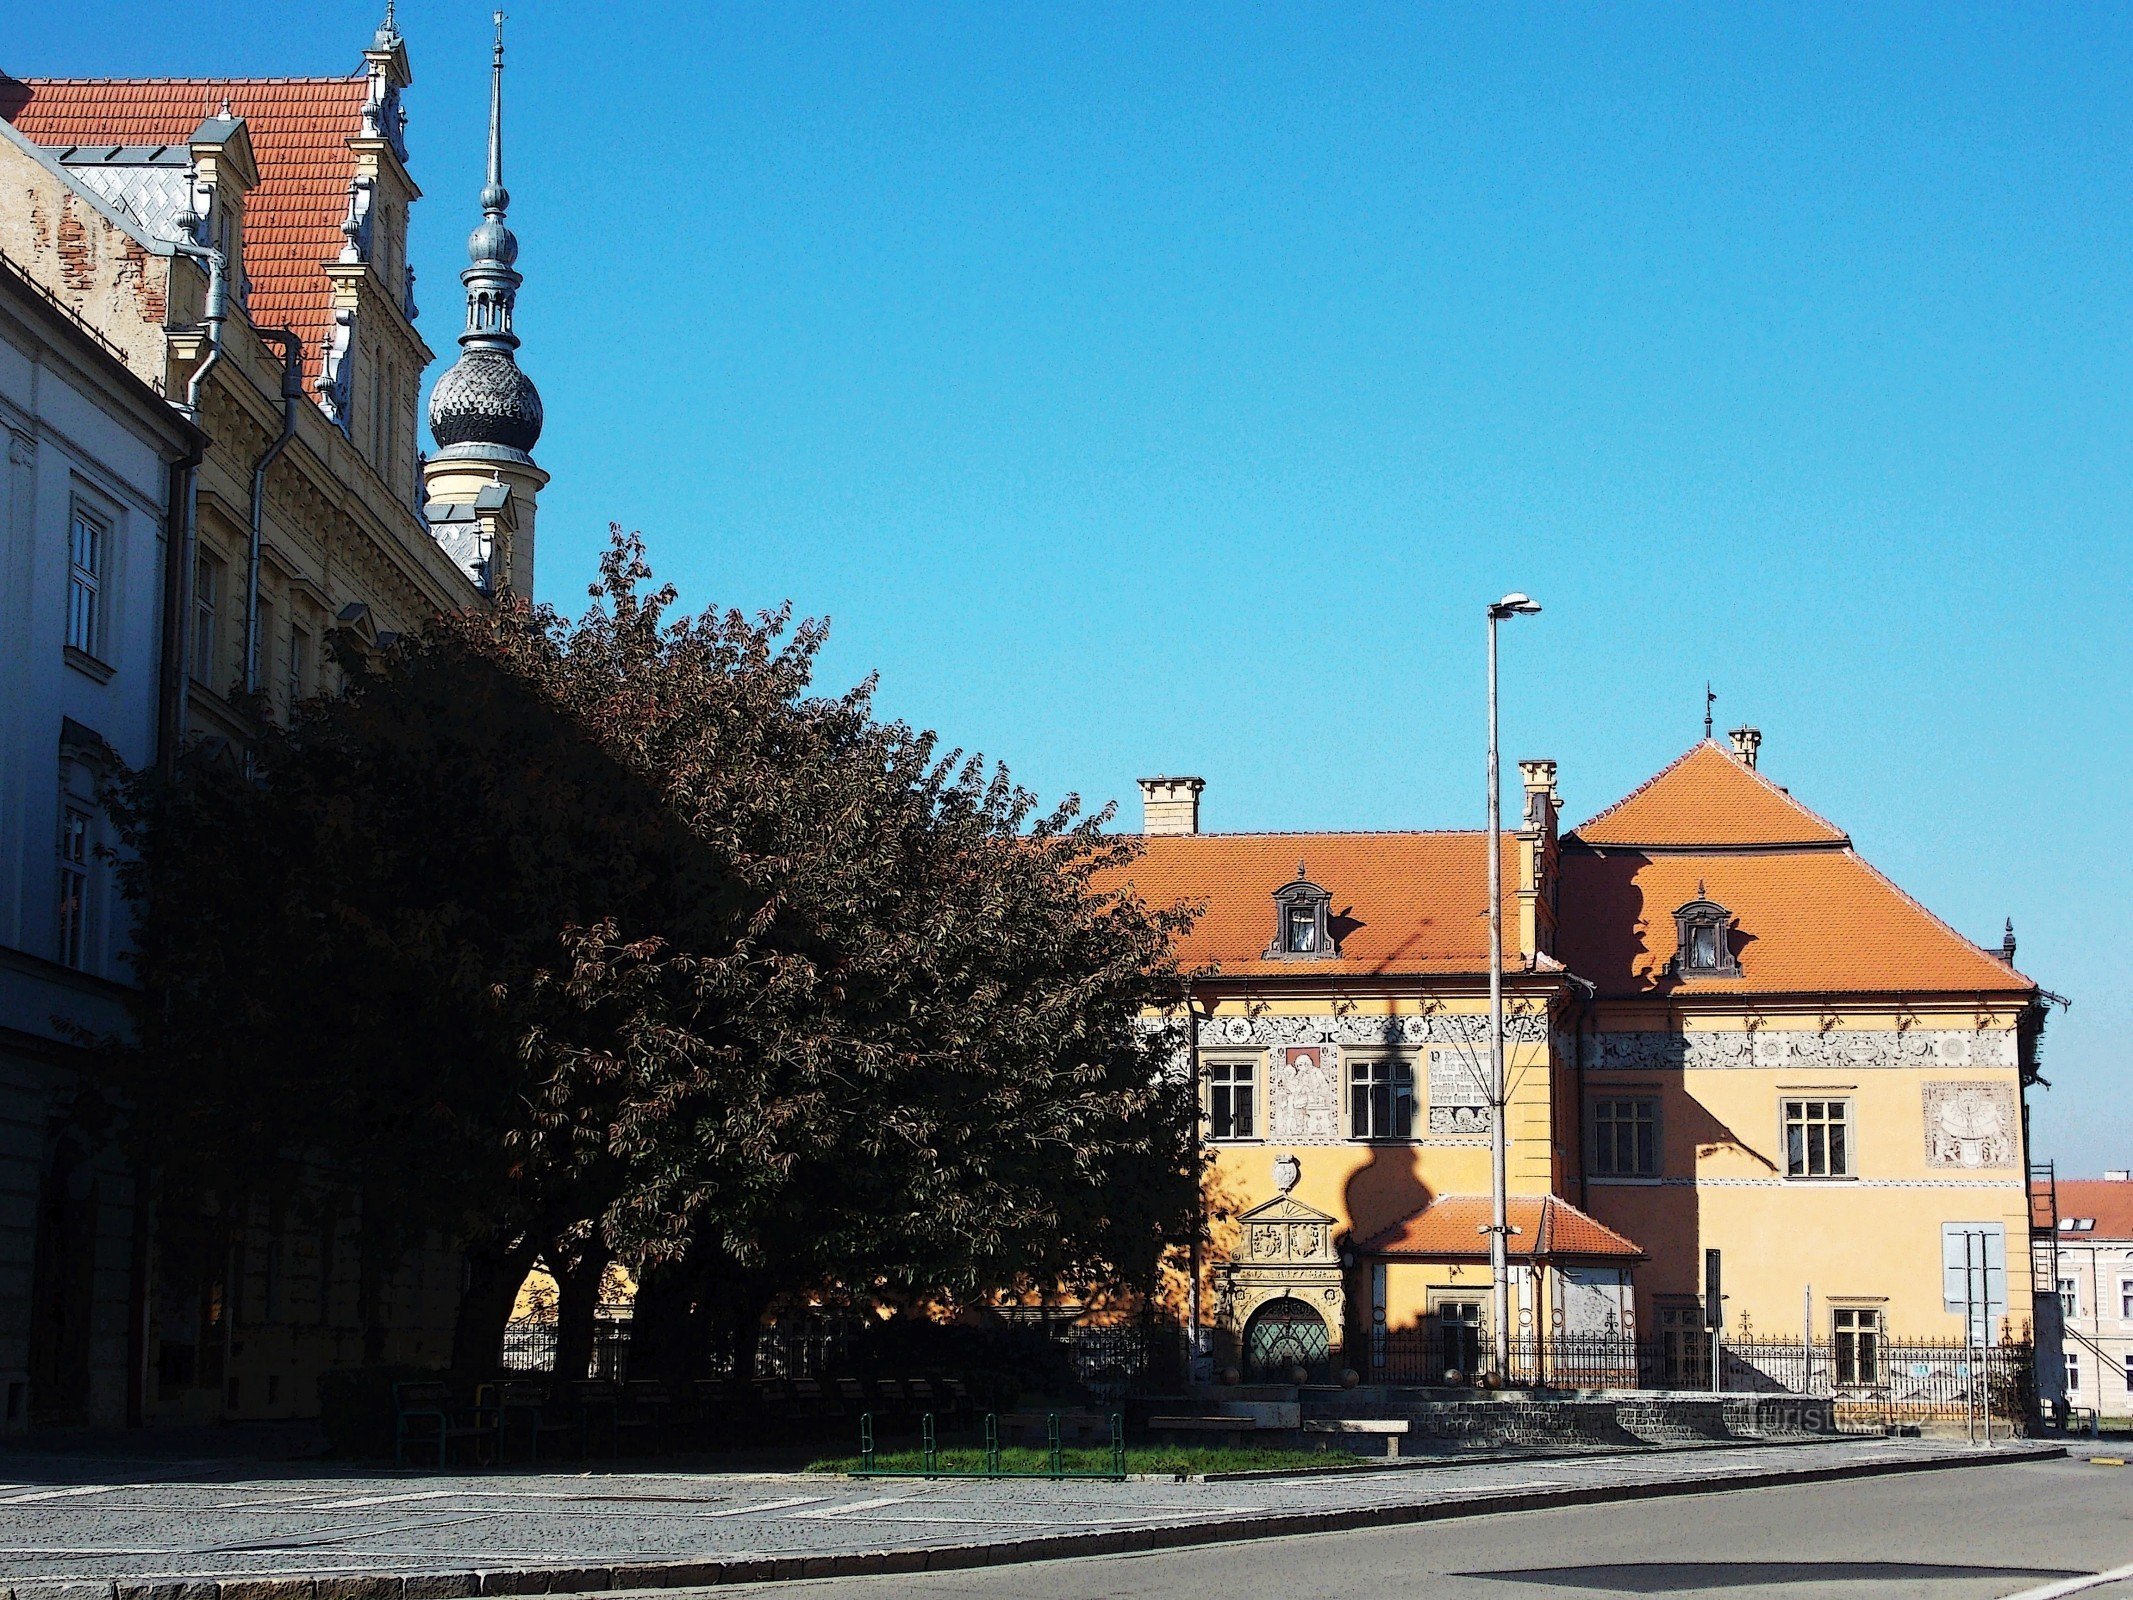 Landmark of Prostějov - Renaissance castle